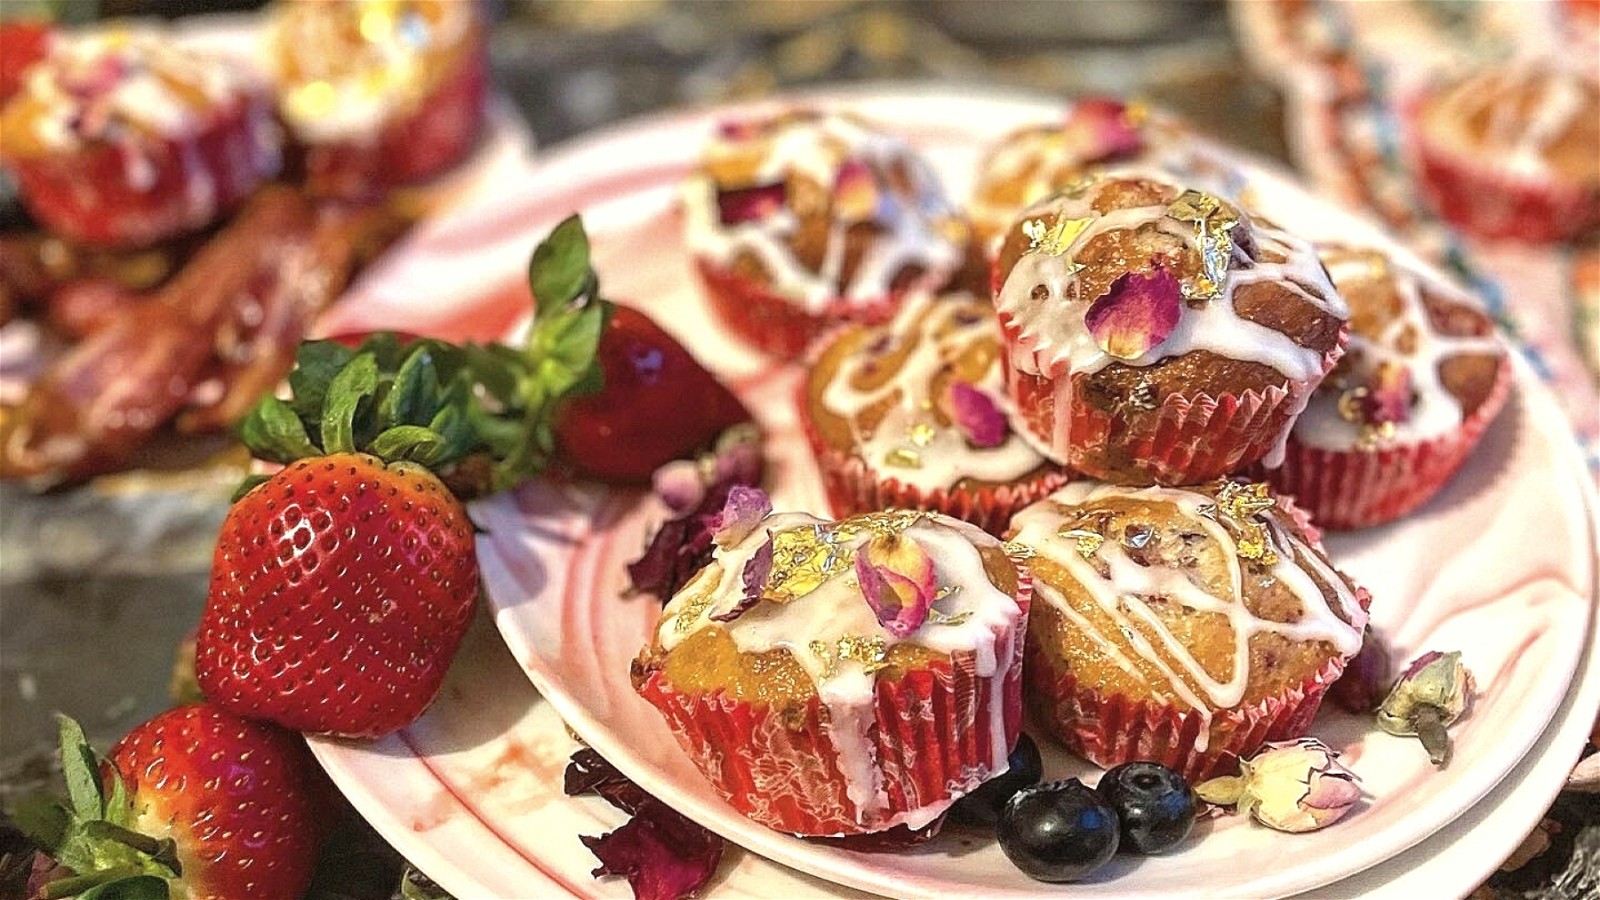 Image of Raspberry & Blueberry Cakes